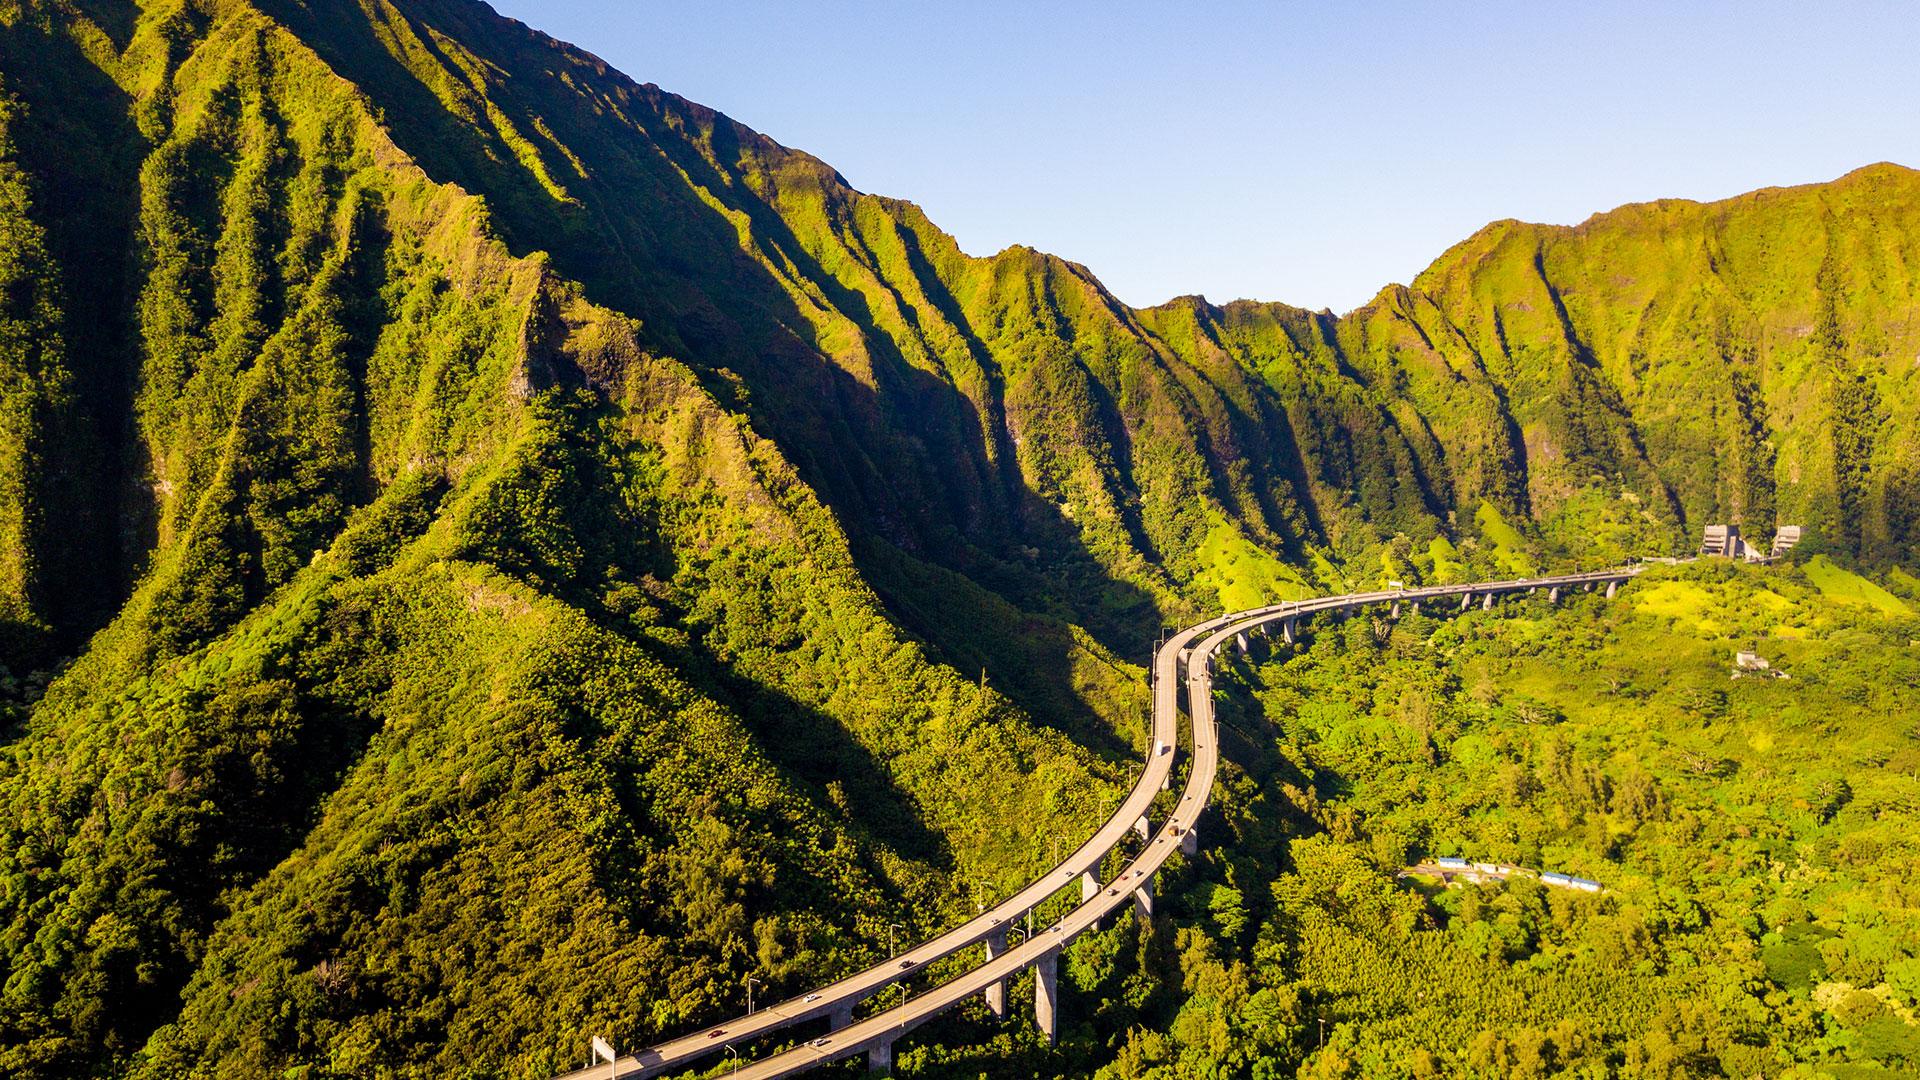 H3 highway Oahu, Hawaii photo.